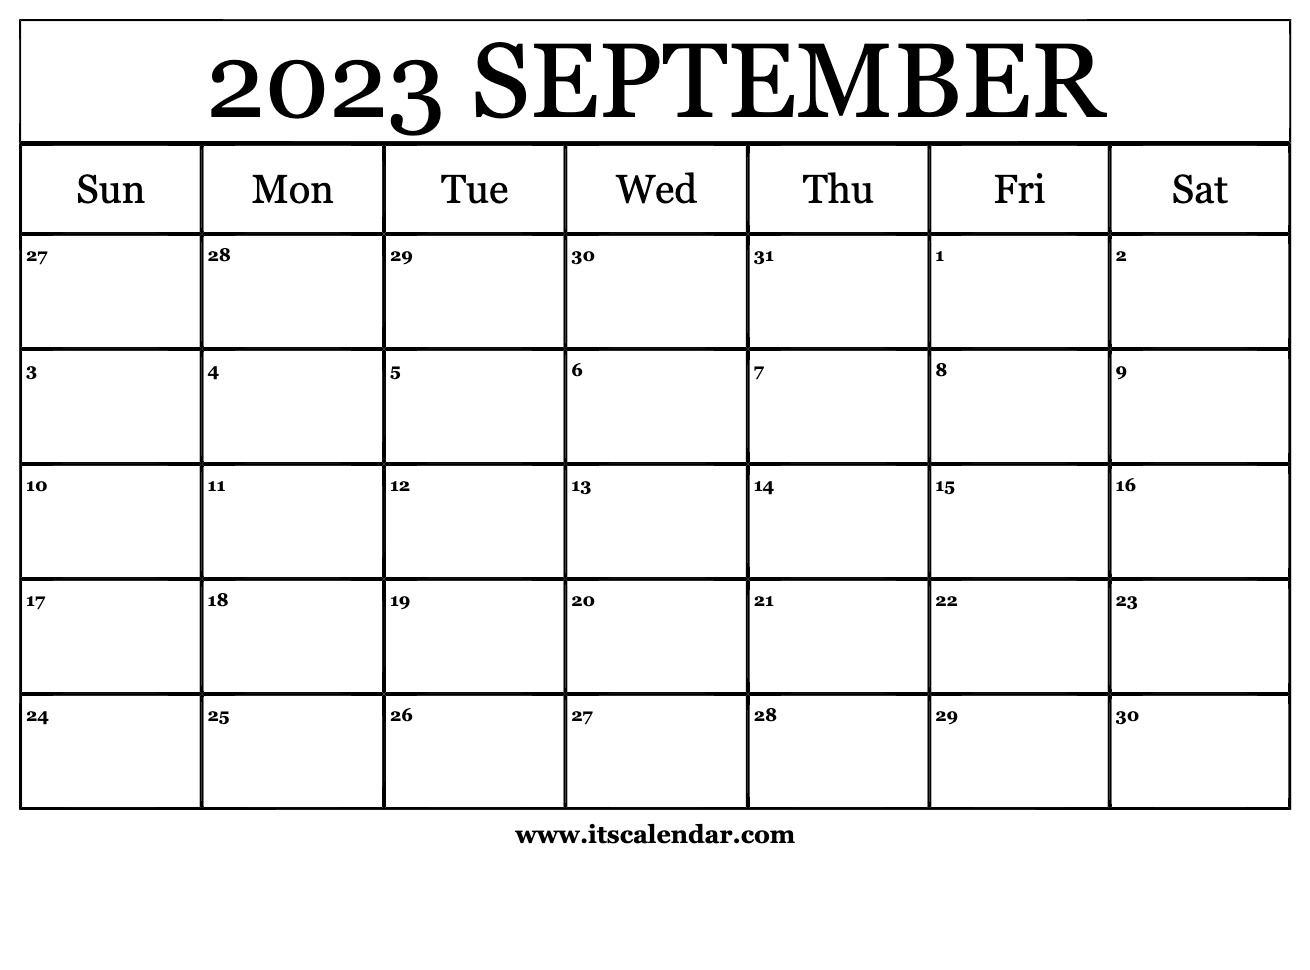 september-2023-calendar-free-printable-with-holidays-september-2023-calendar-of-the-month-free